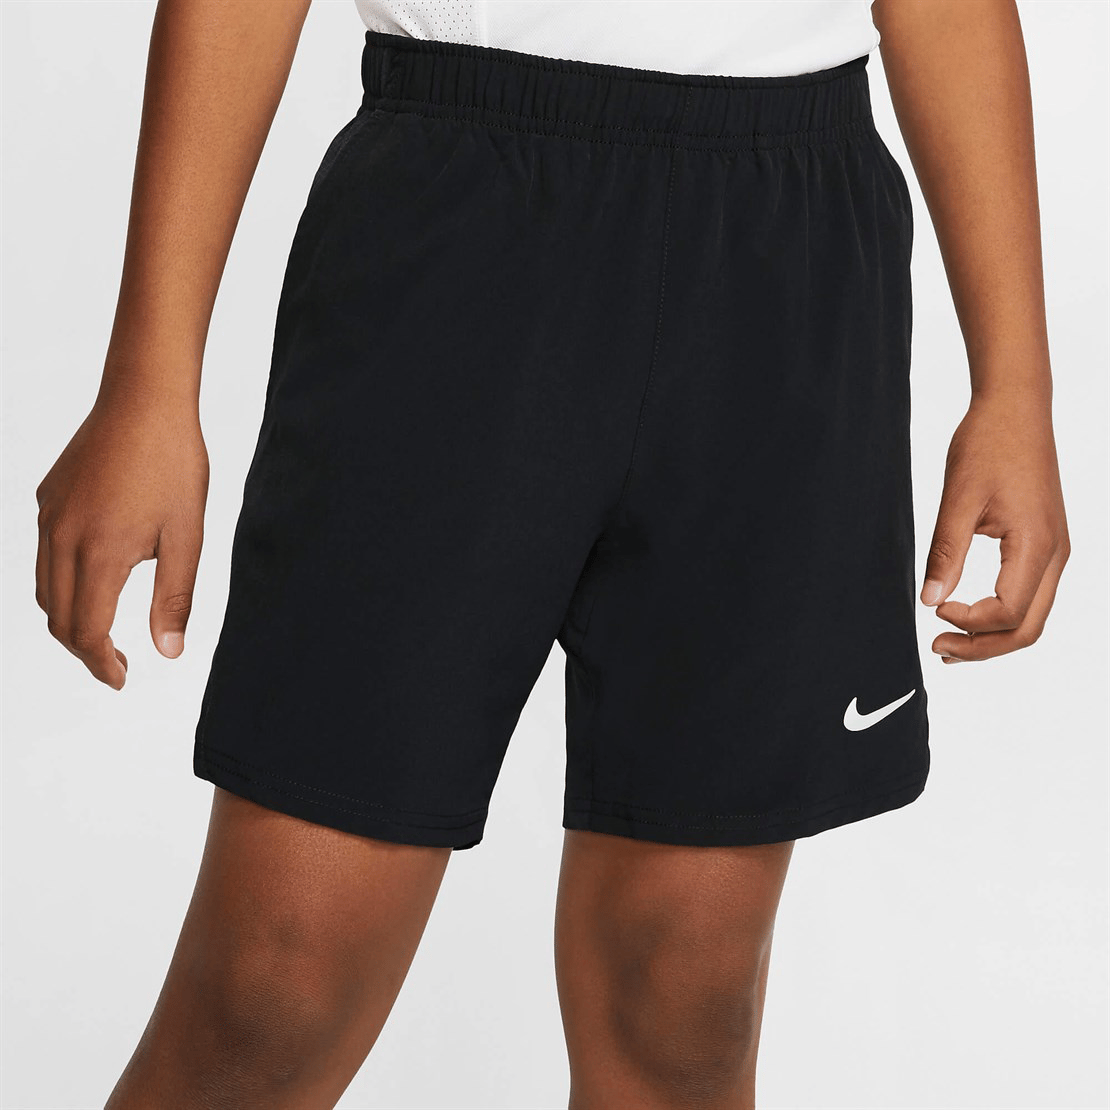 NikeCourt Flex Ace Genç Erkek Çocuk Tenis Şortu » Tenis Shop